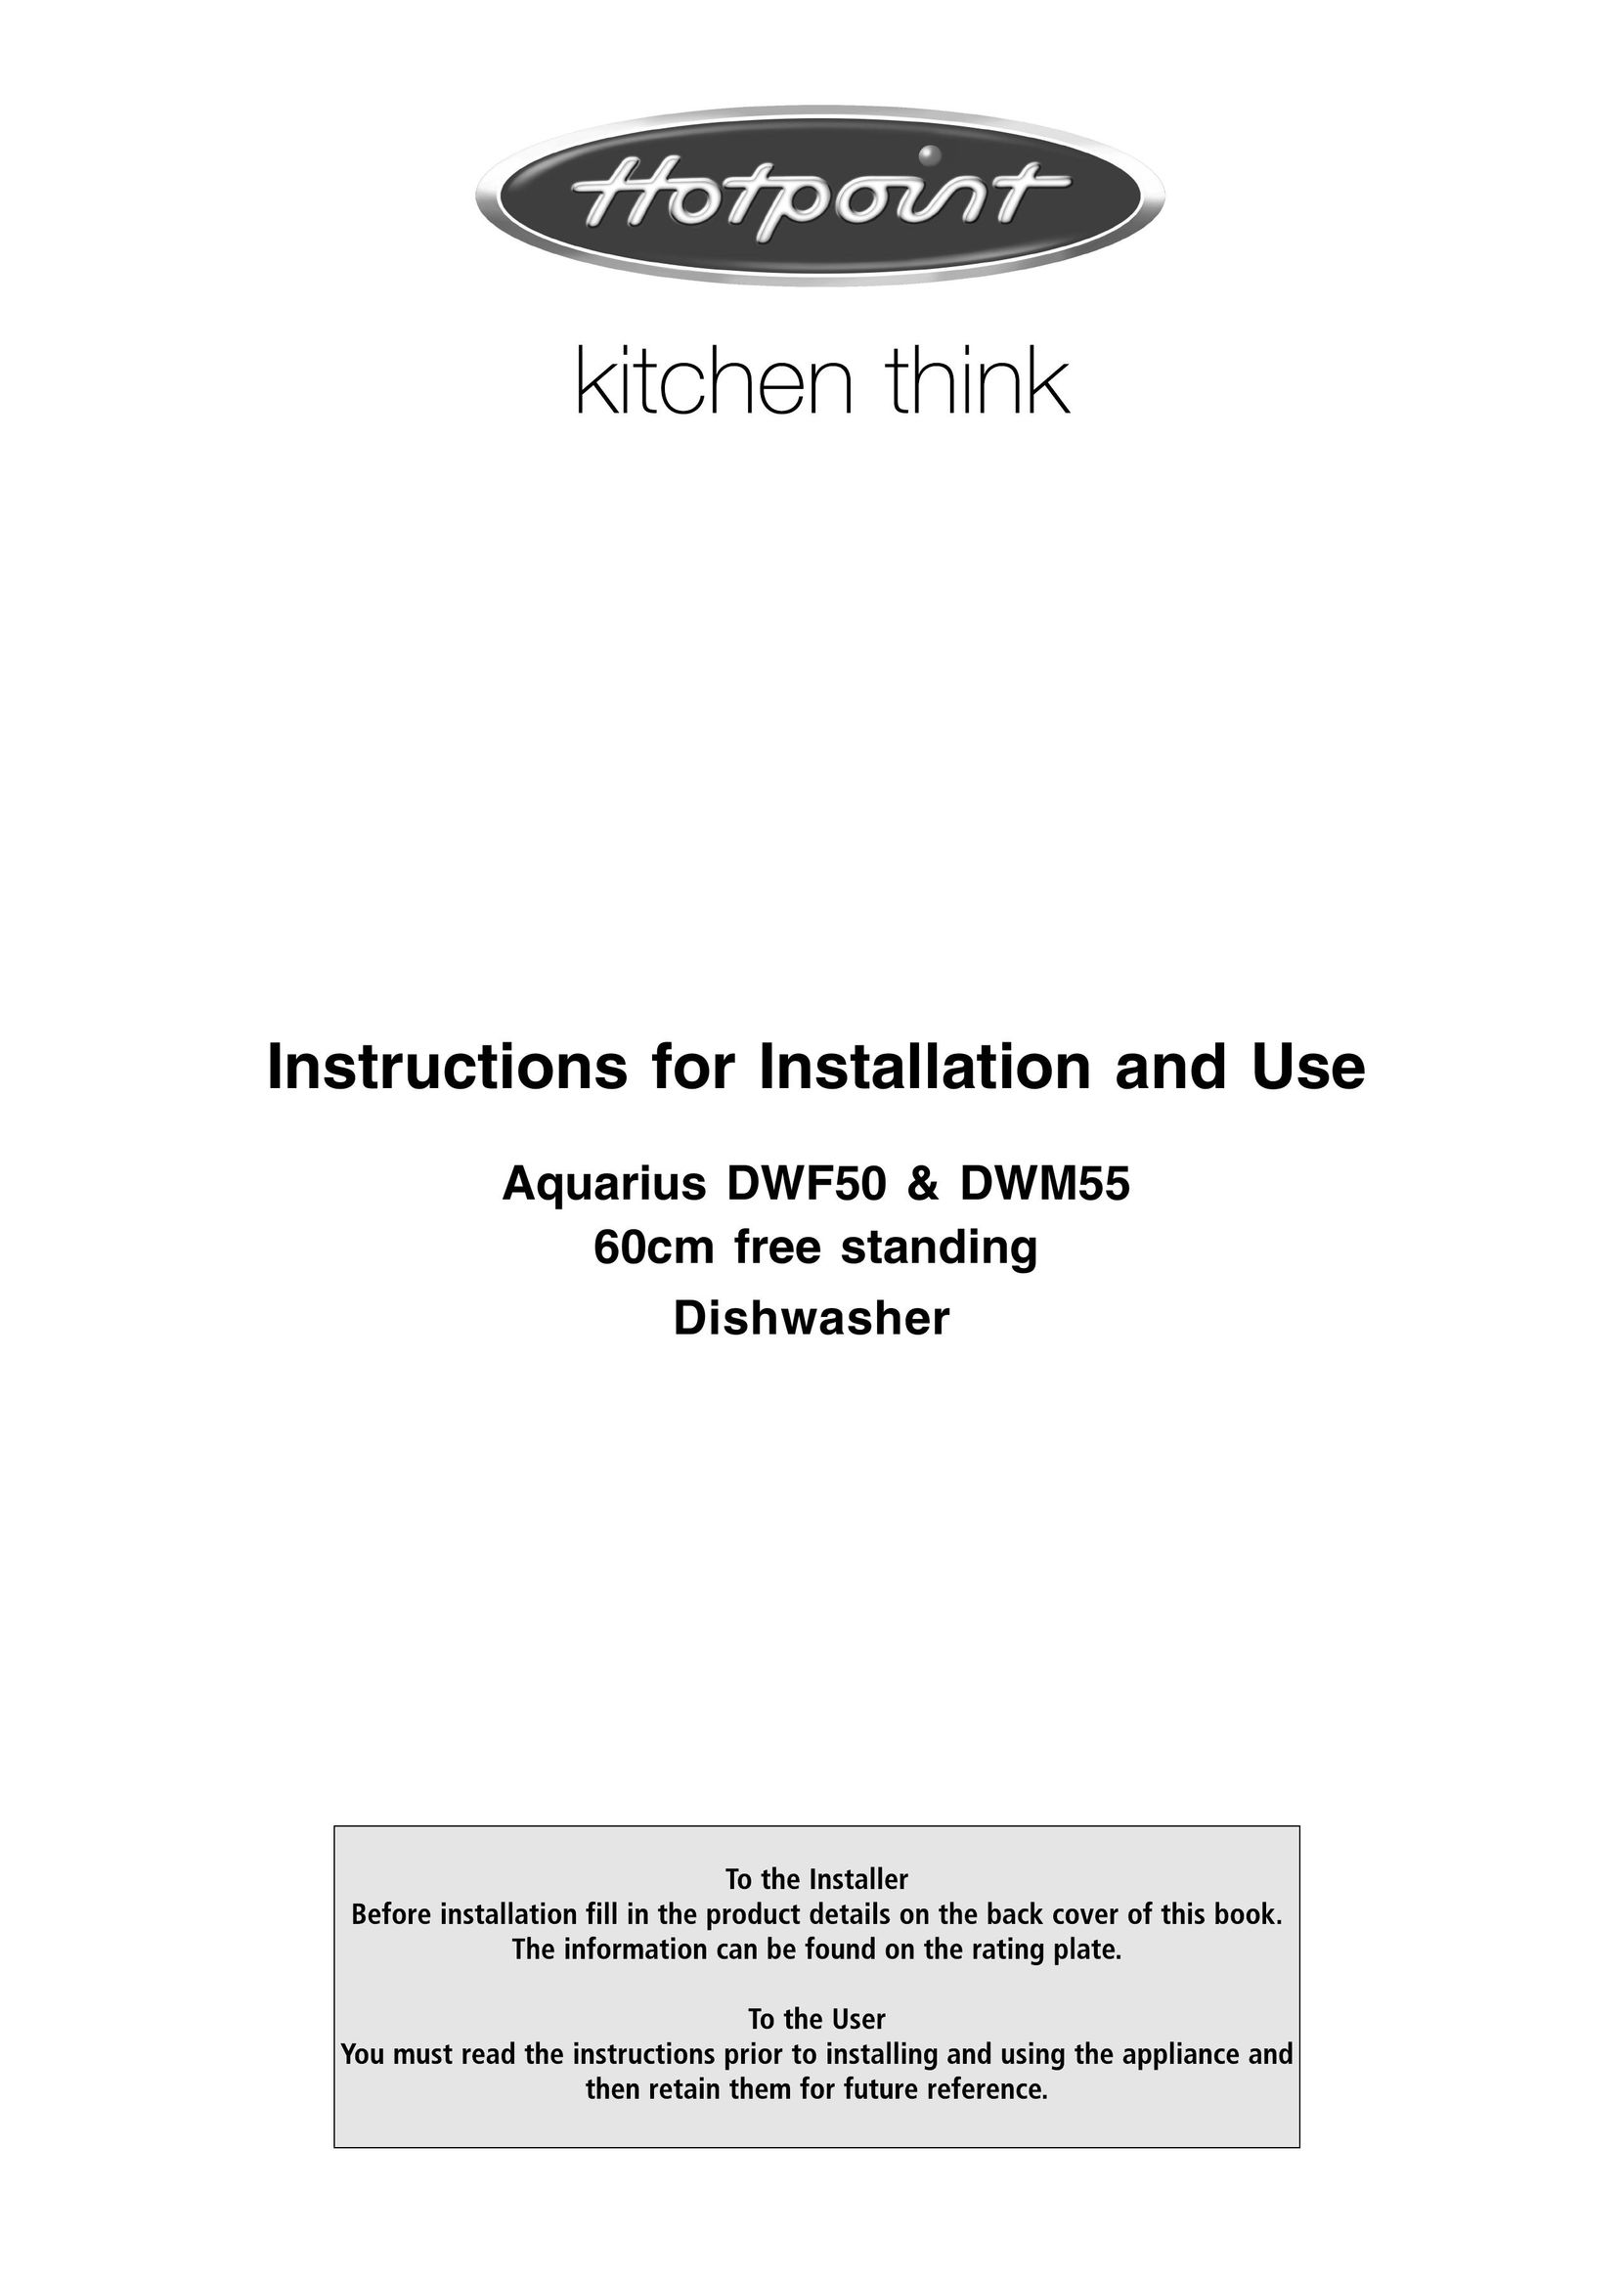 Hotpoint DWF50 Dishwasher User Manual